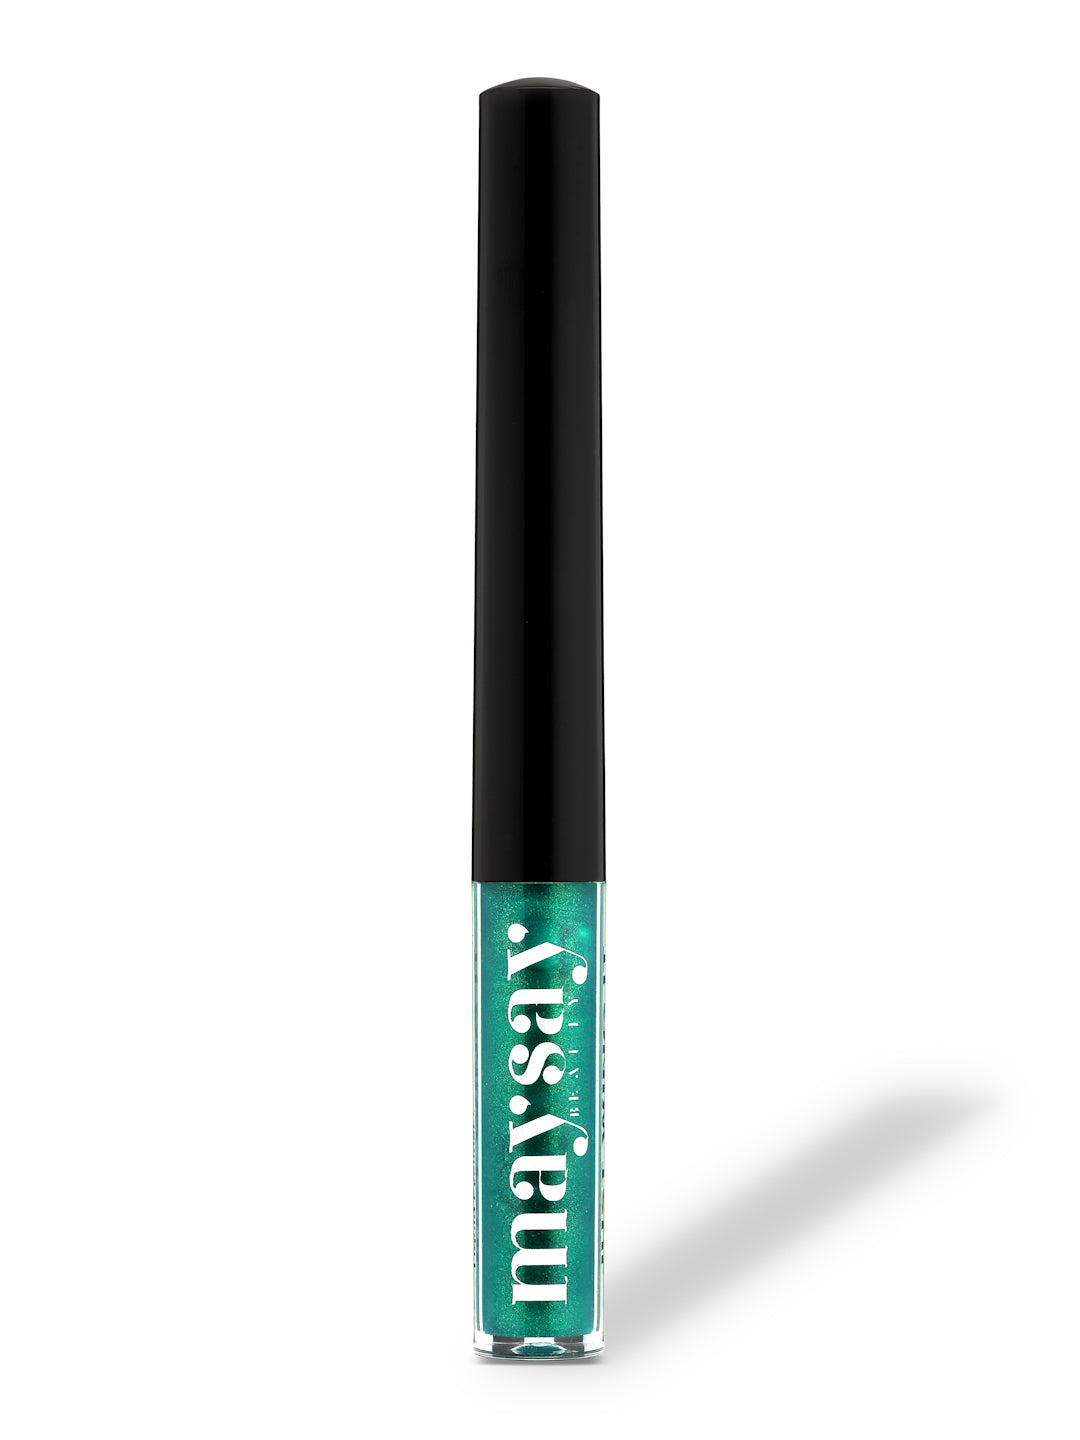 Maysy Beauty Just Wing It Eyeliner- Emerald Green (3ml)